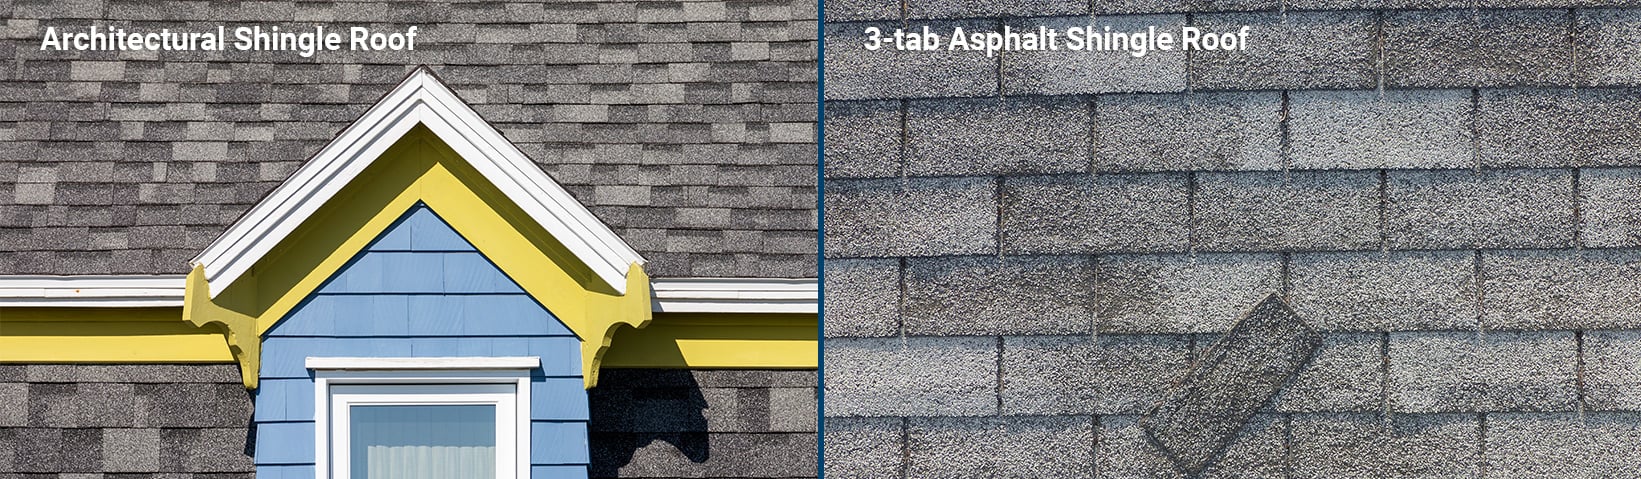 decra-metal-roofing-web-architectural-3-tab-shingles-comparison